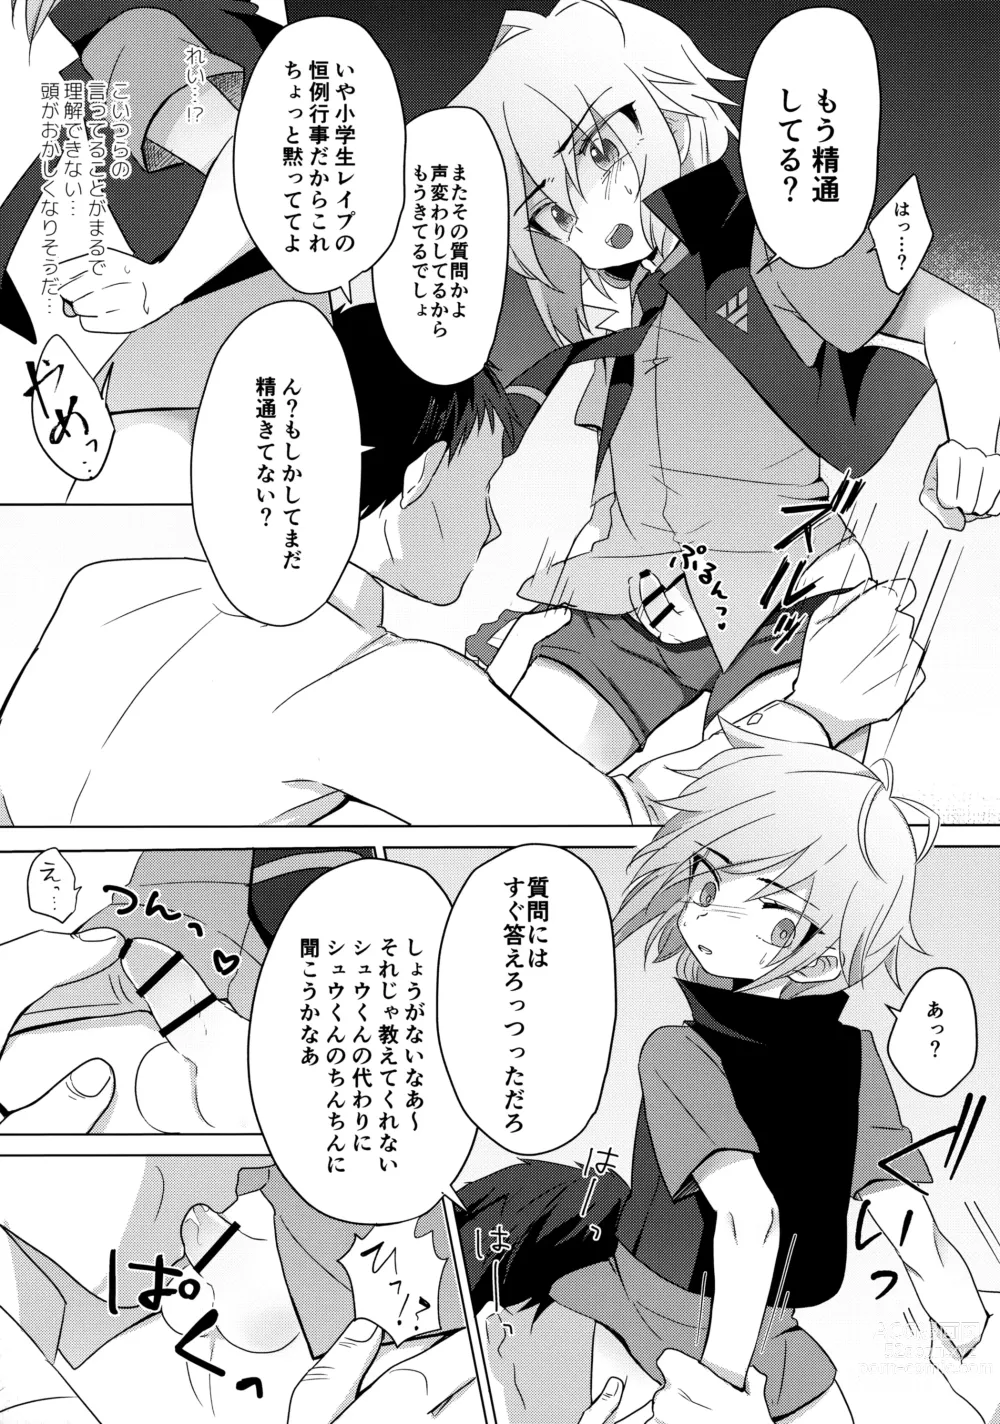 Page 12 of doujinshi Hakoniwa Therapy